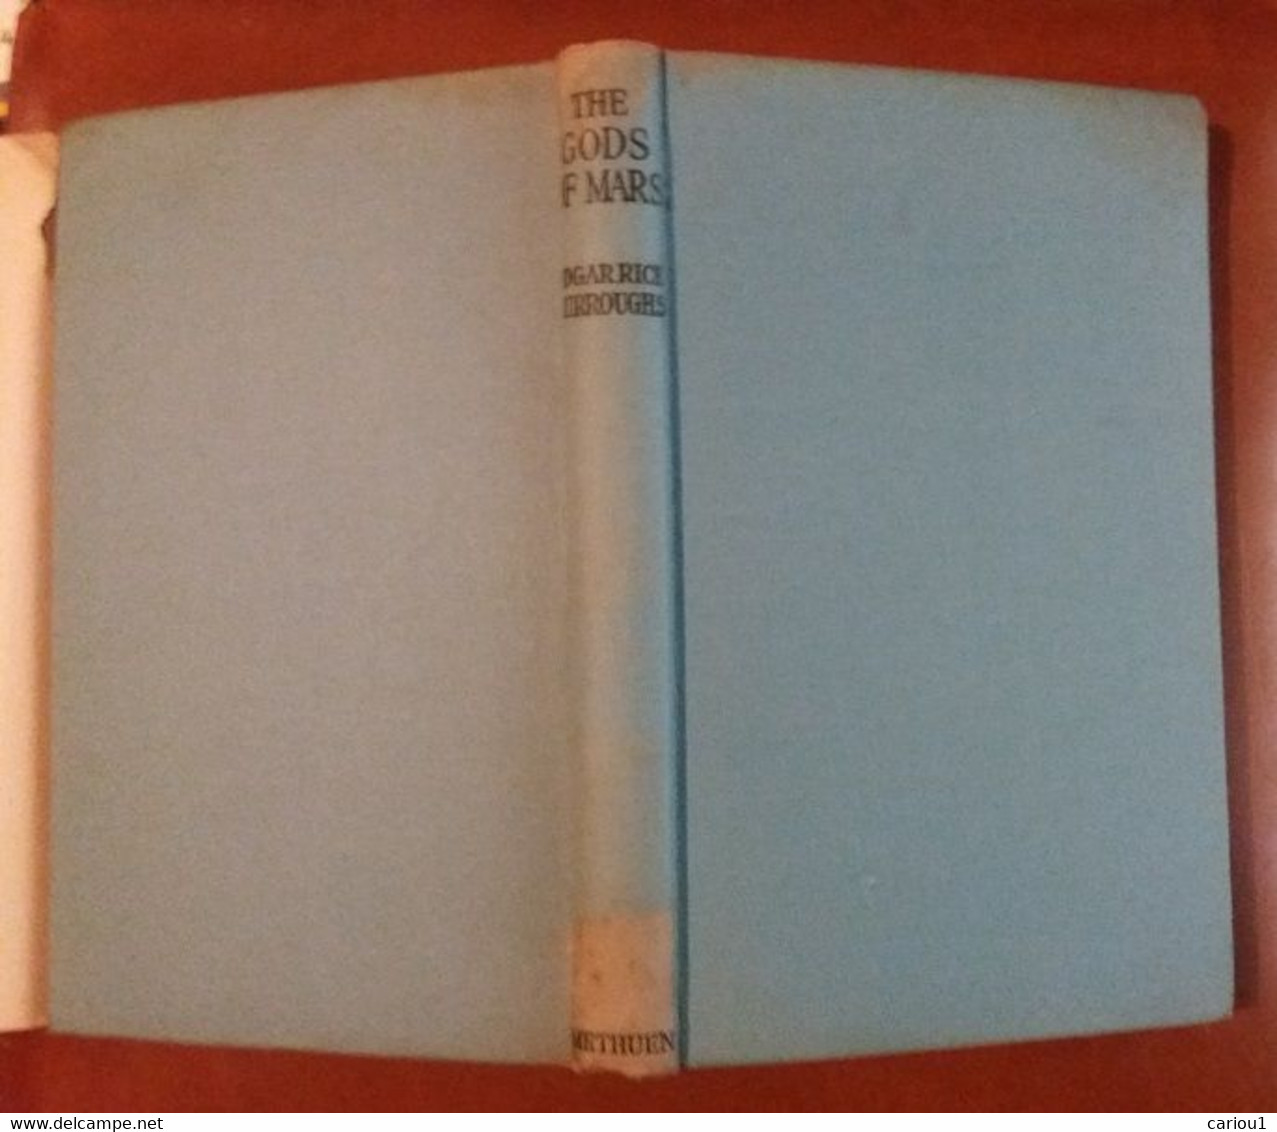 C1 Edgar Rice Burroughs THE GODS OF MARS Methuen 1942 JAQUETTE Dust Jacket PORT INCLUS France - Sciencefiction